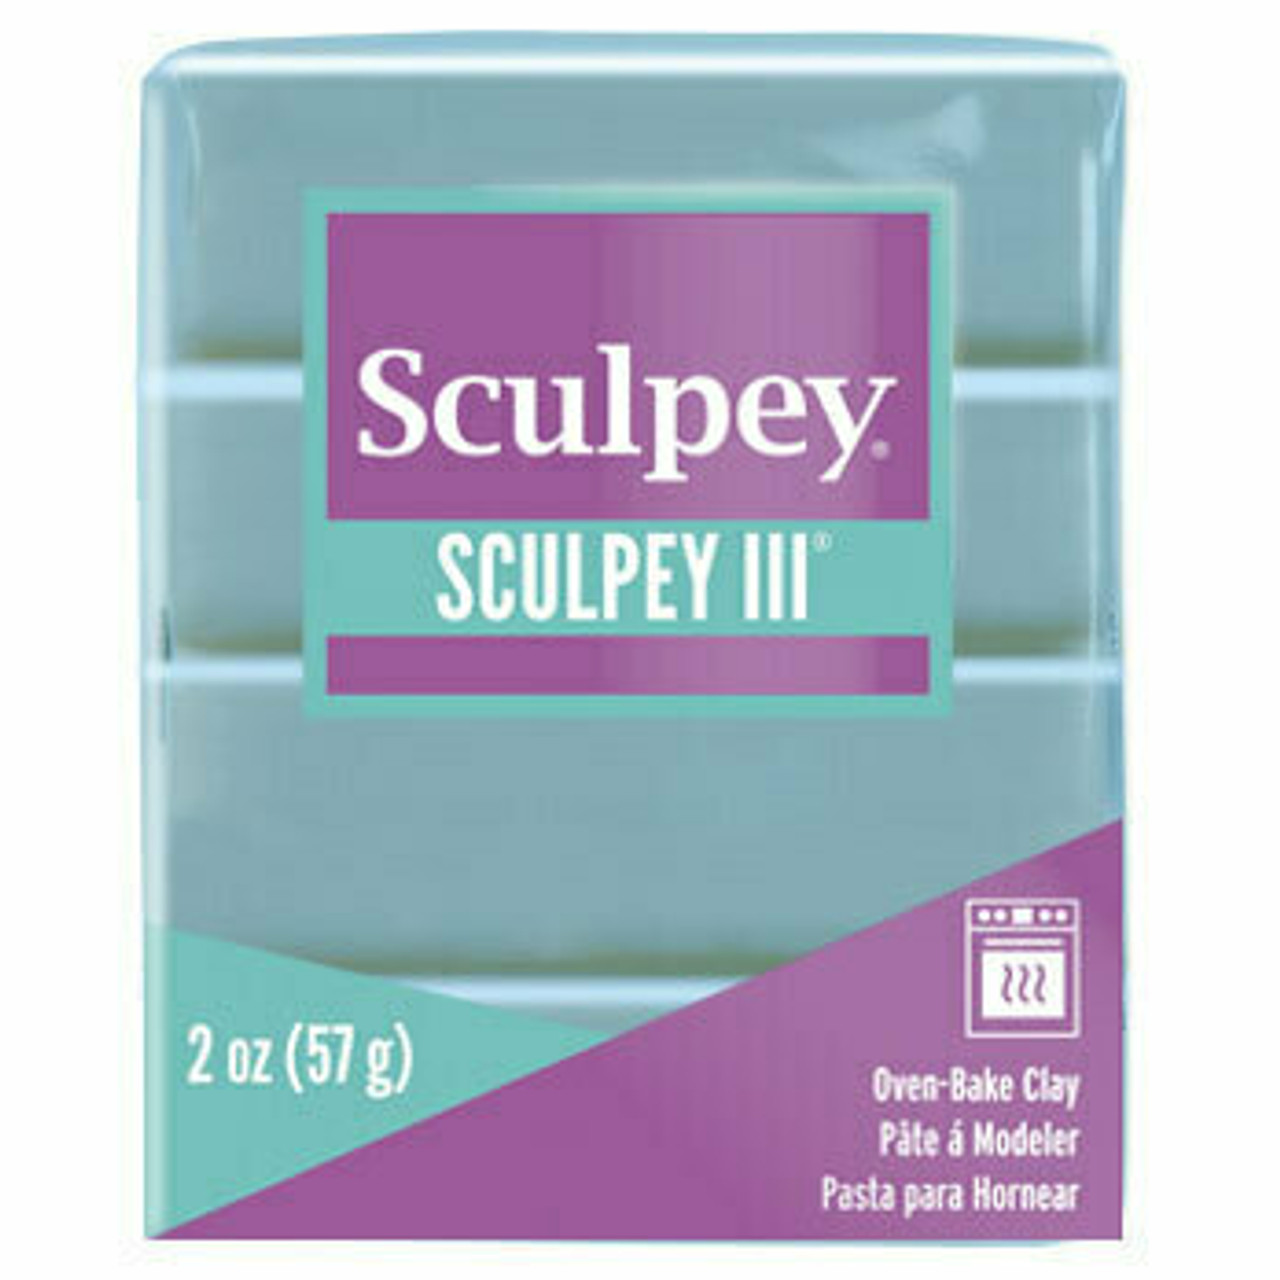 Sculpey III Tranquility 2oz (57g)